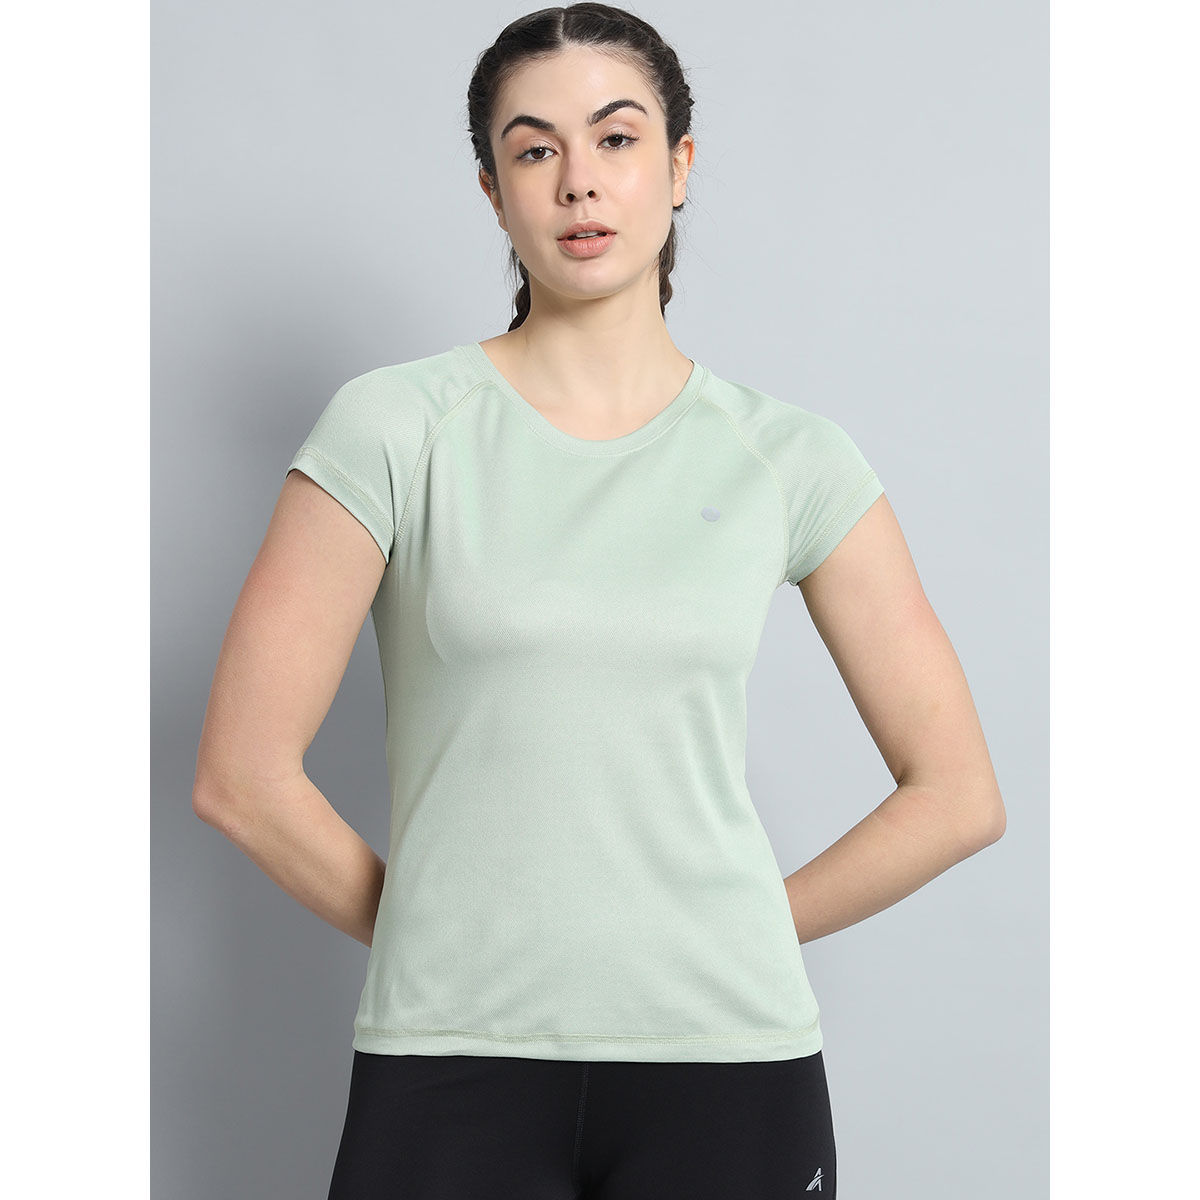 Buy Athlisis Women Grey Short-sleeve Lightweight Quick Dry Running Fitness  Sports T-shirts online